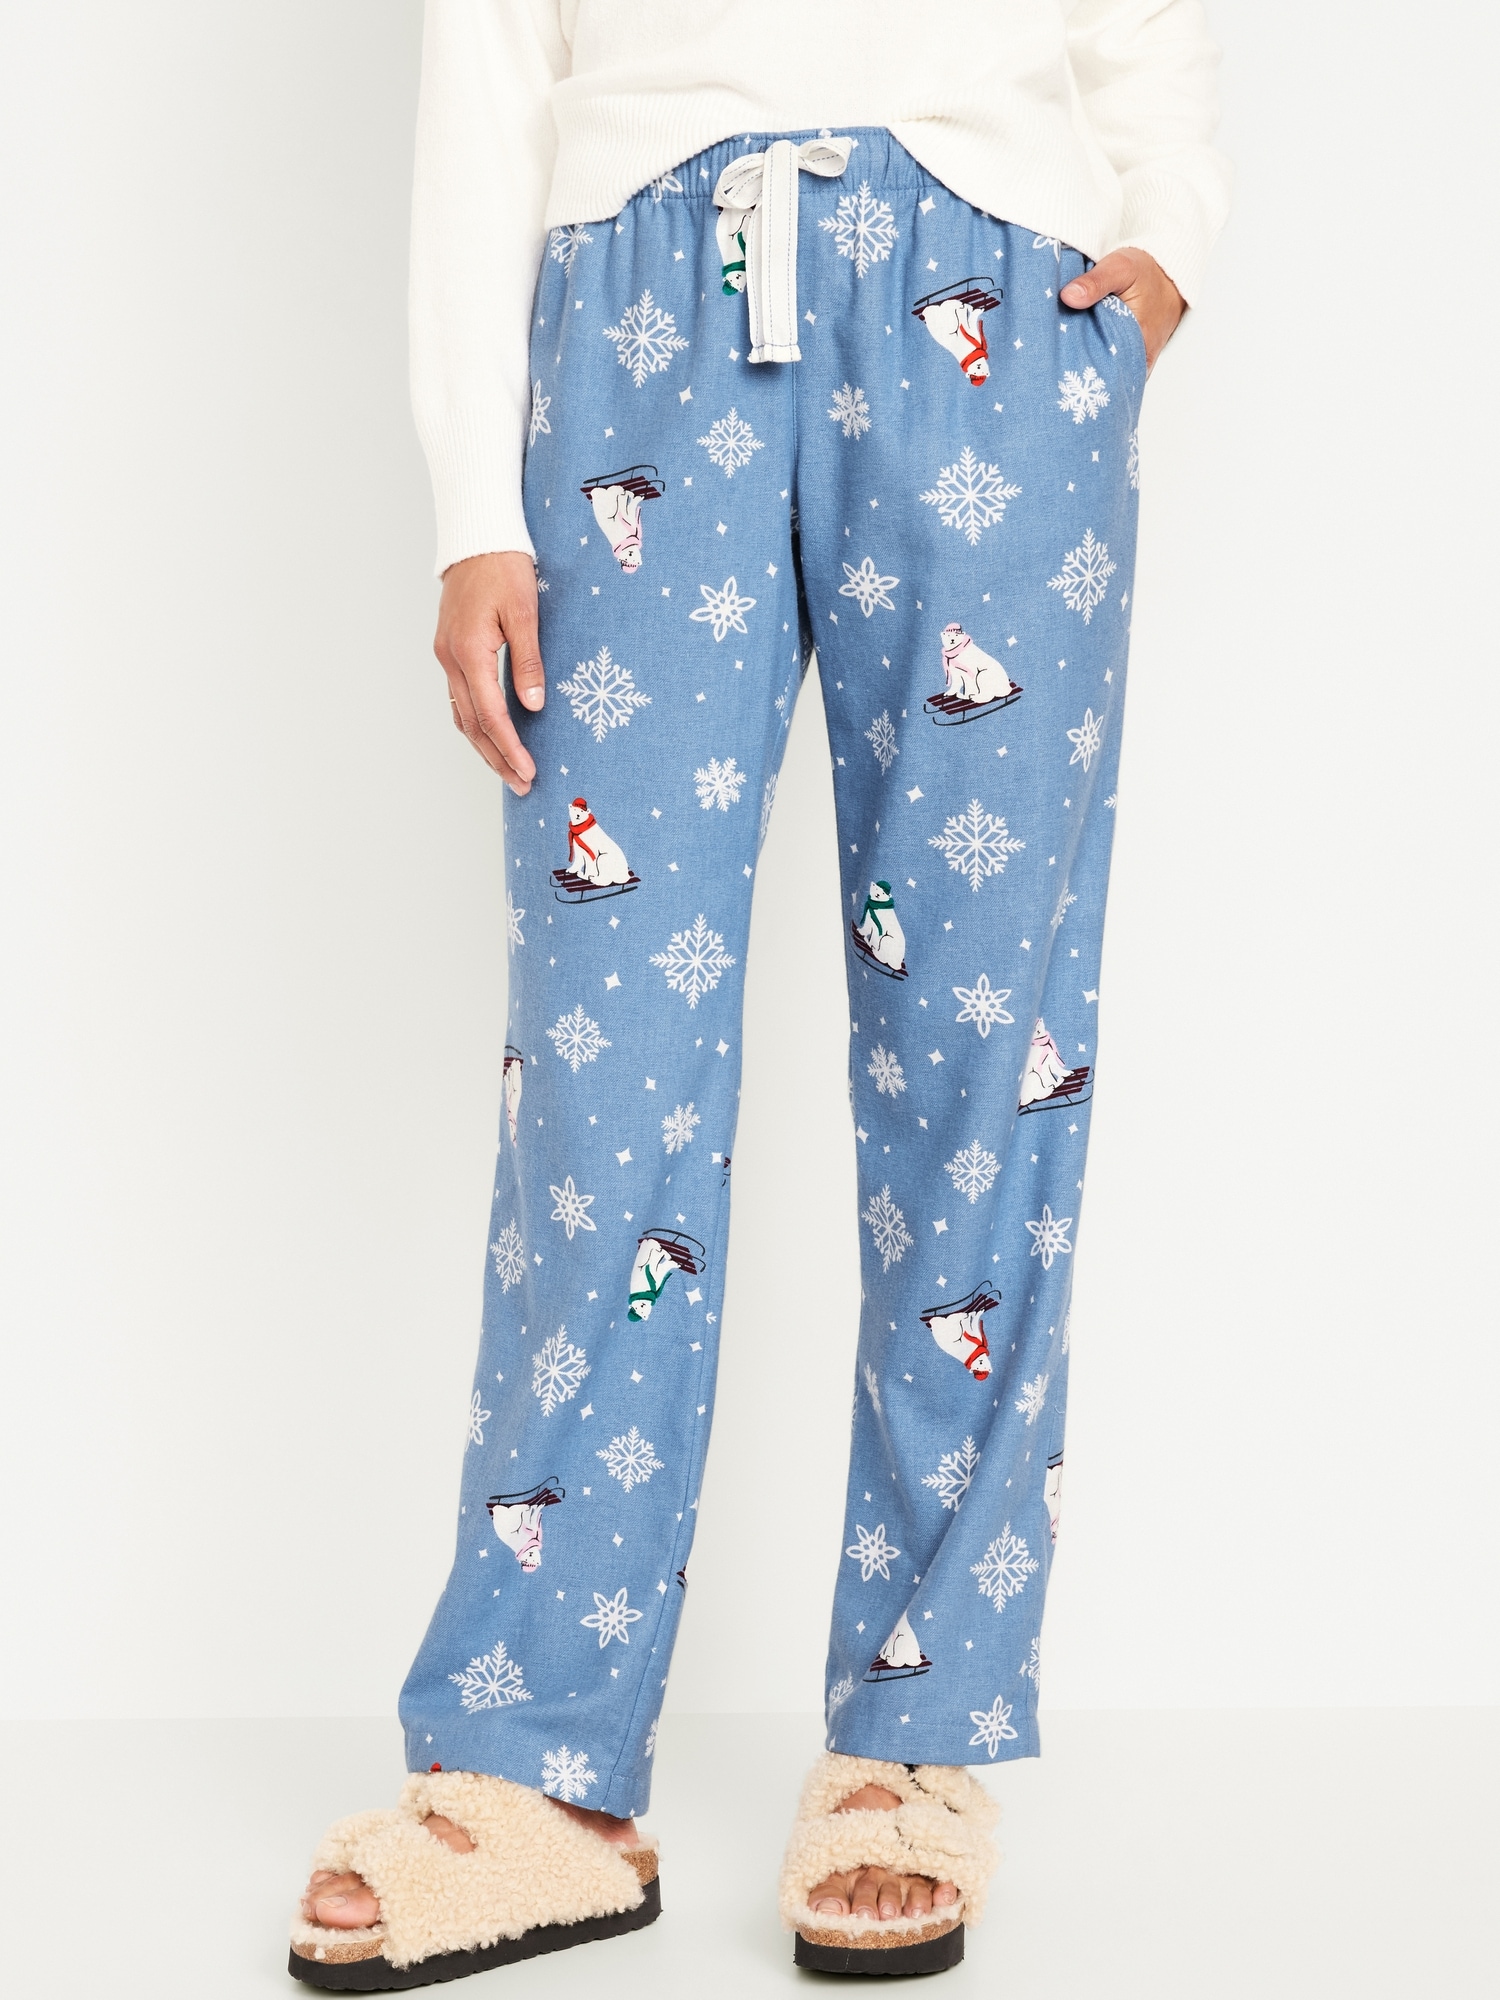  Pajama Pants For Women